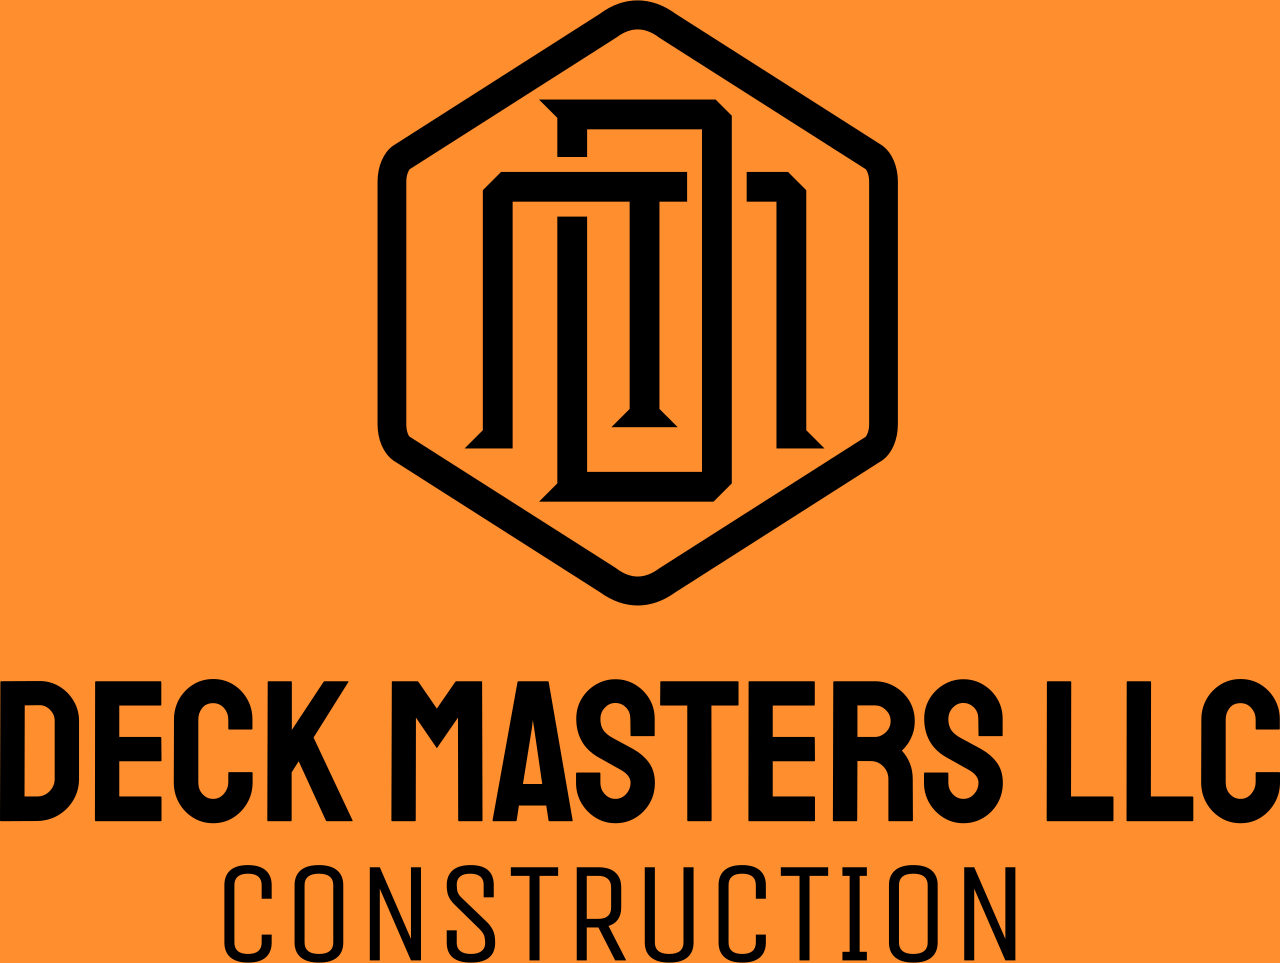 Deck Masters LLC's web page